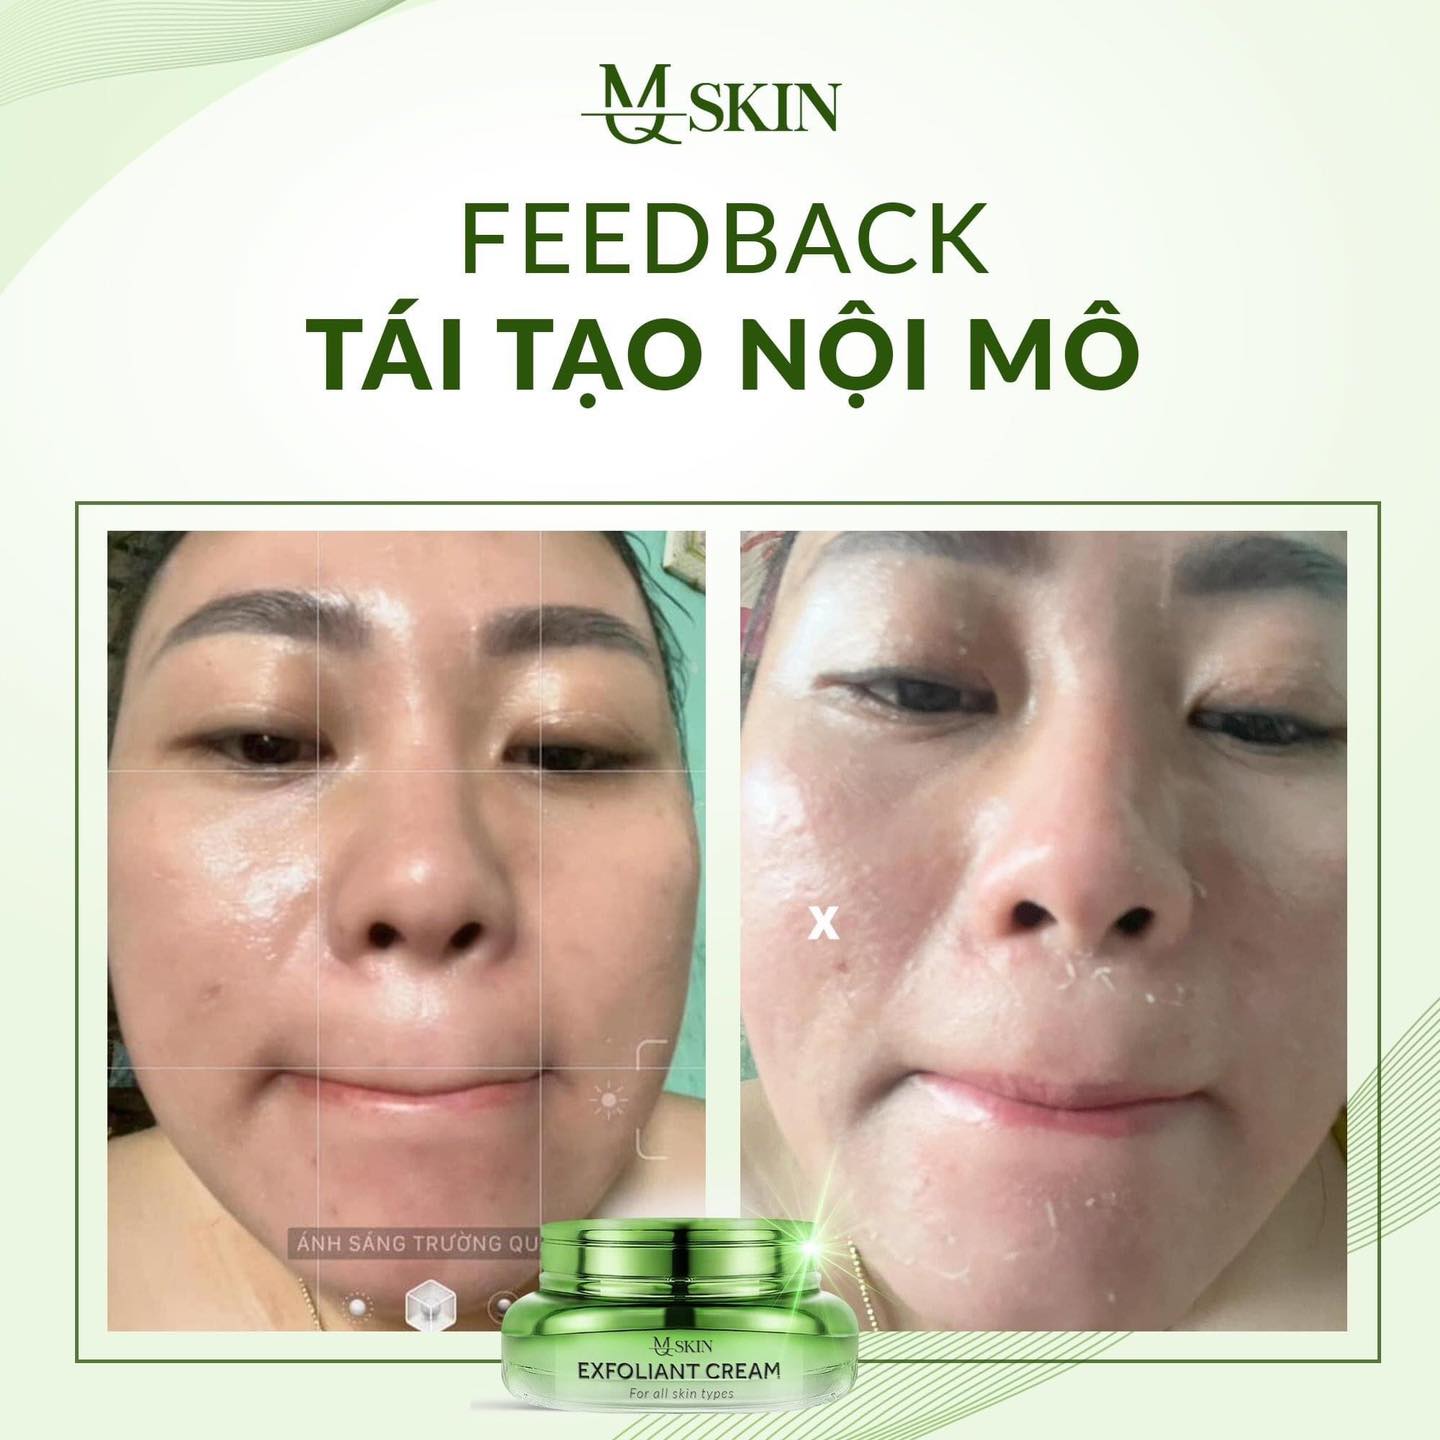 Kem Face Tái Tạo Nội Sinh Exfoliant Cream MQ Skin Tặng Kem Dưỡng HA - 8936117150913